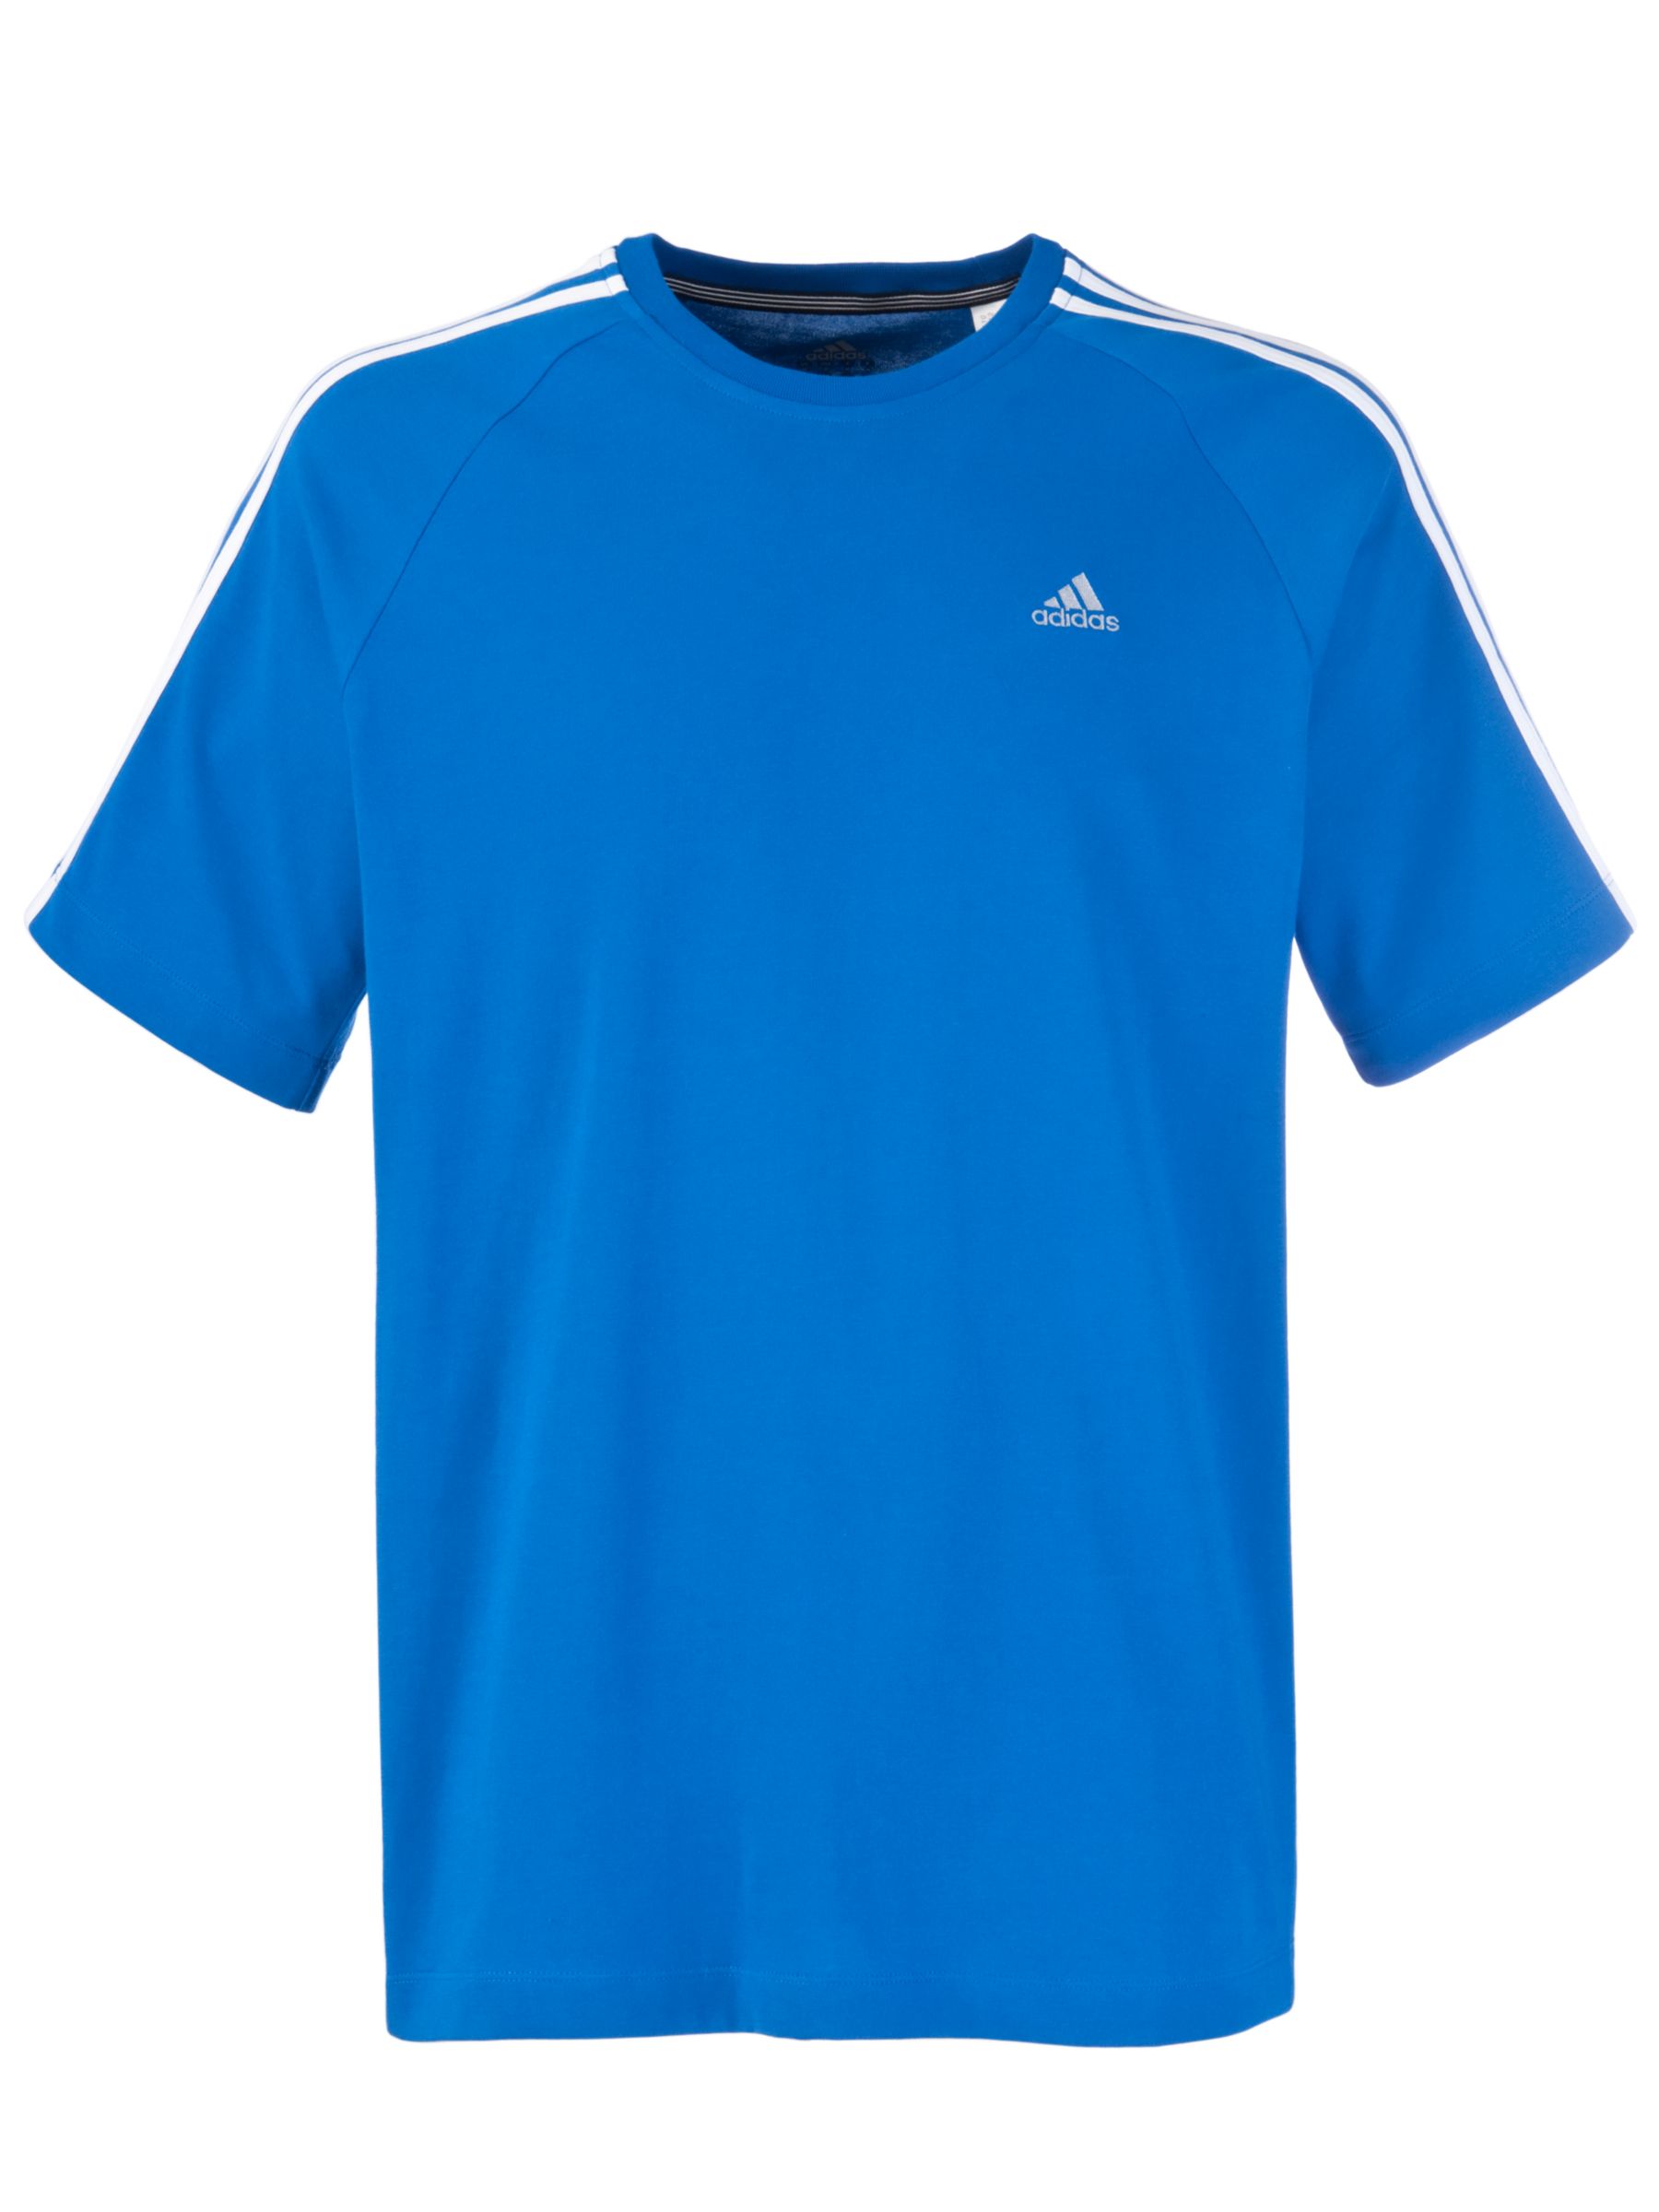 Adidas Essential 3 Stripe T-Shirt, Blue